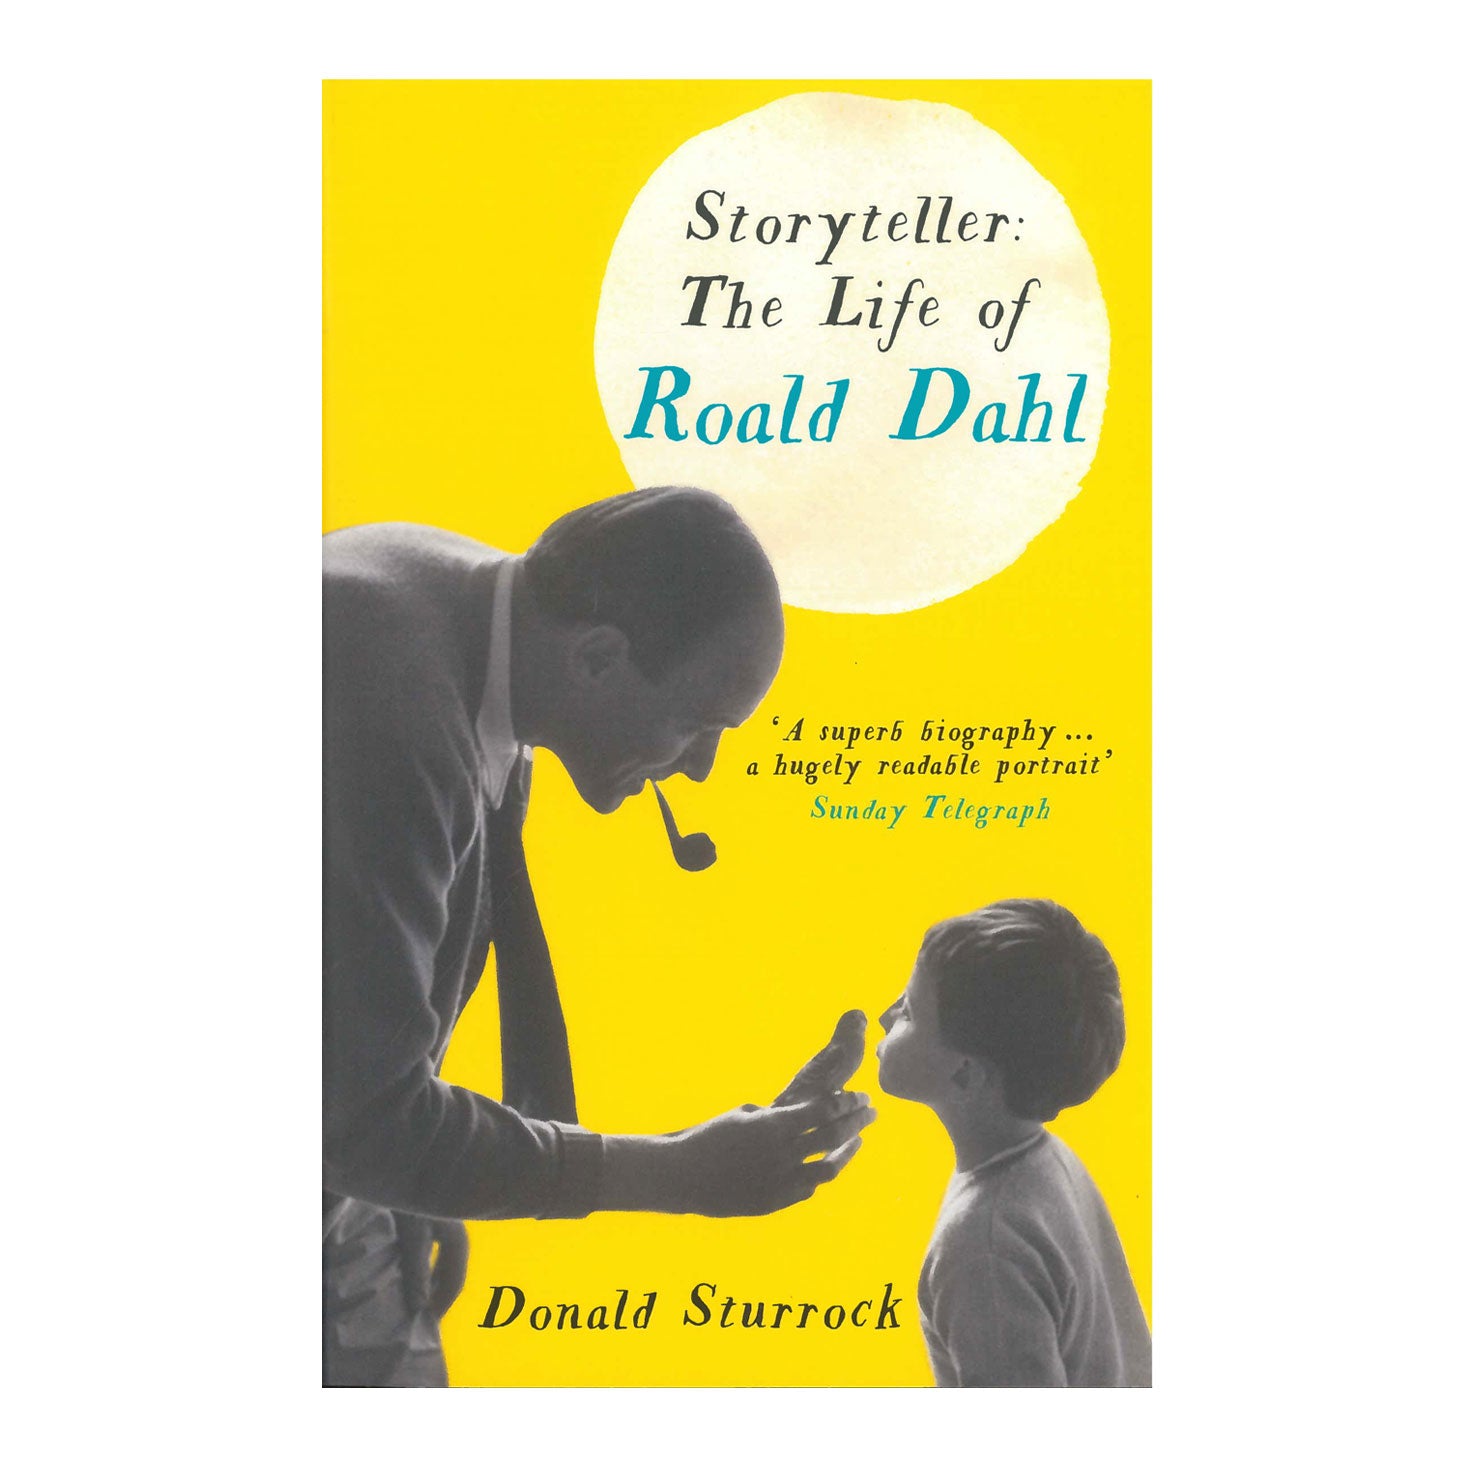 Storyteller: The Life of Roald Dahl by Donald Sturrock